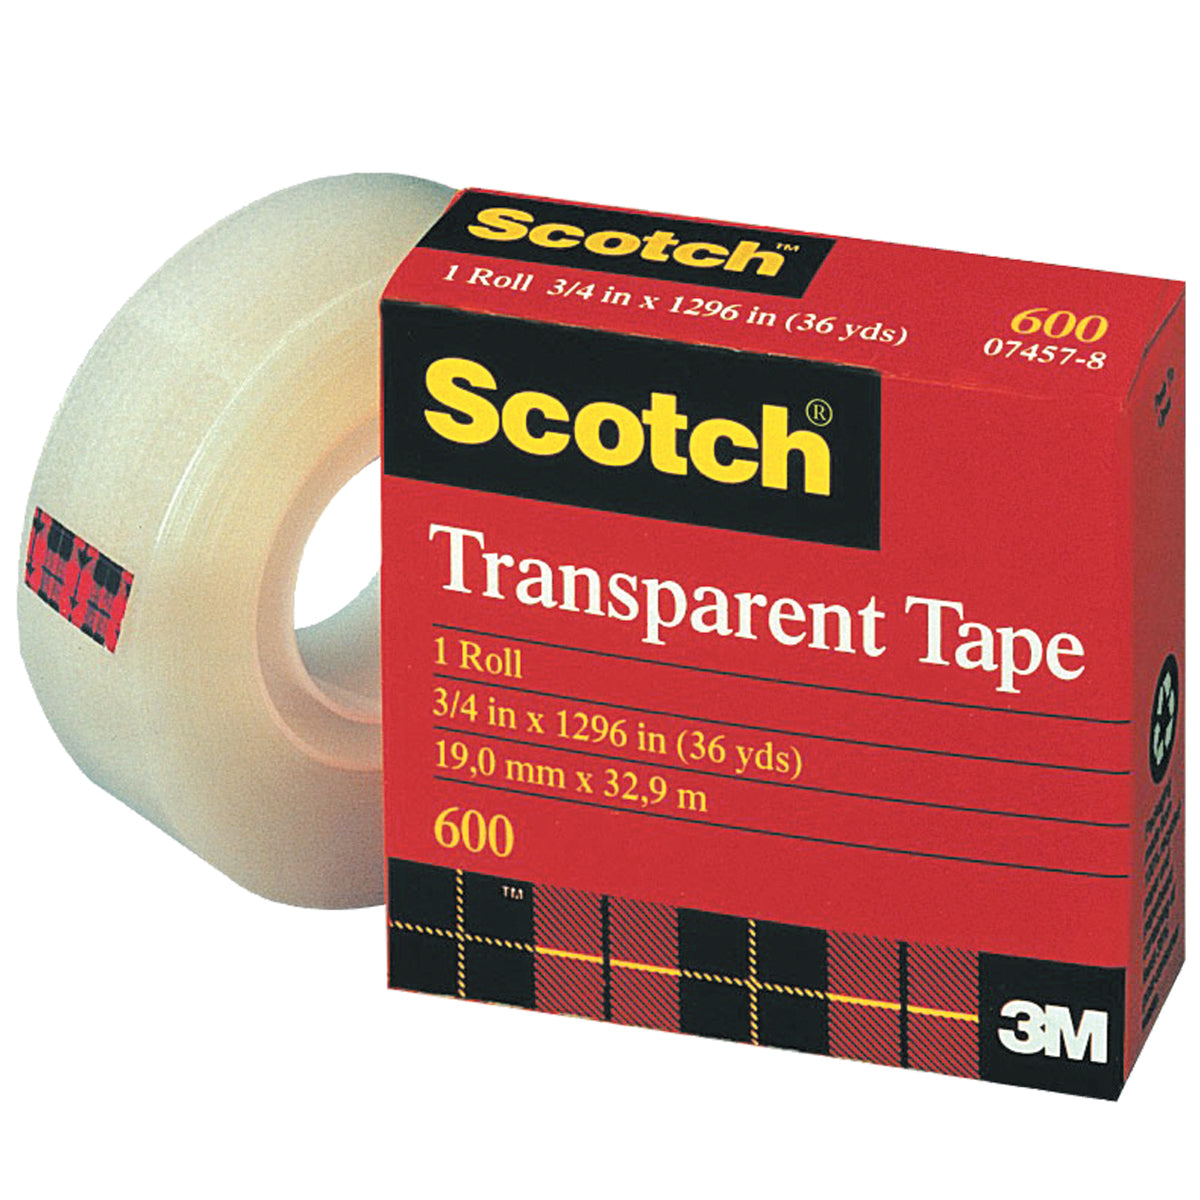 1/2" x 36 yds. Scotch 600 MultiTask Tape 12/Case